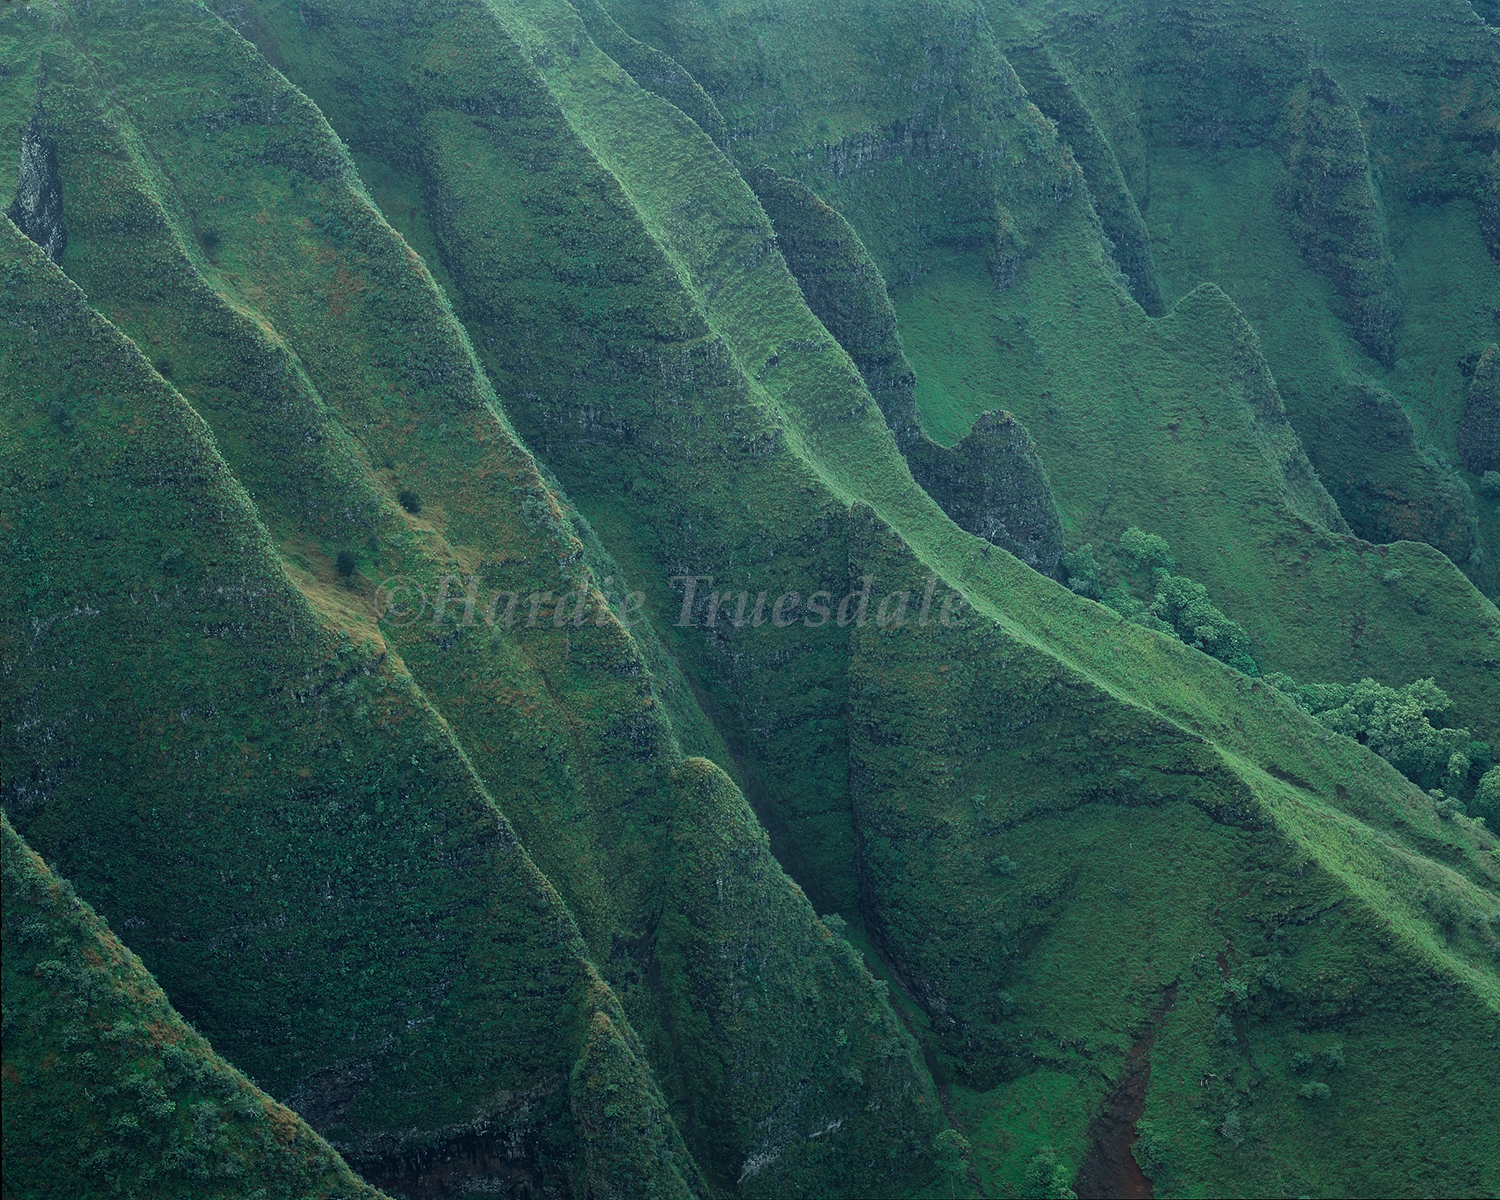  HI#027 " The Green Cliffs of Nuololo, Kauai"  